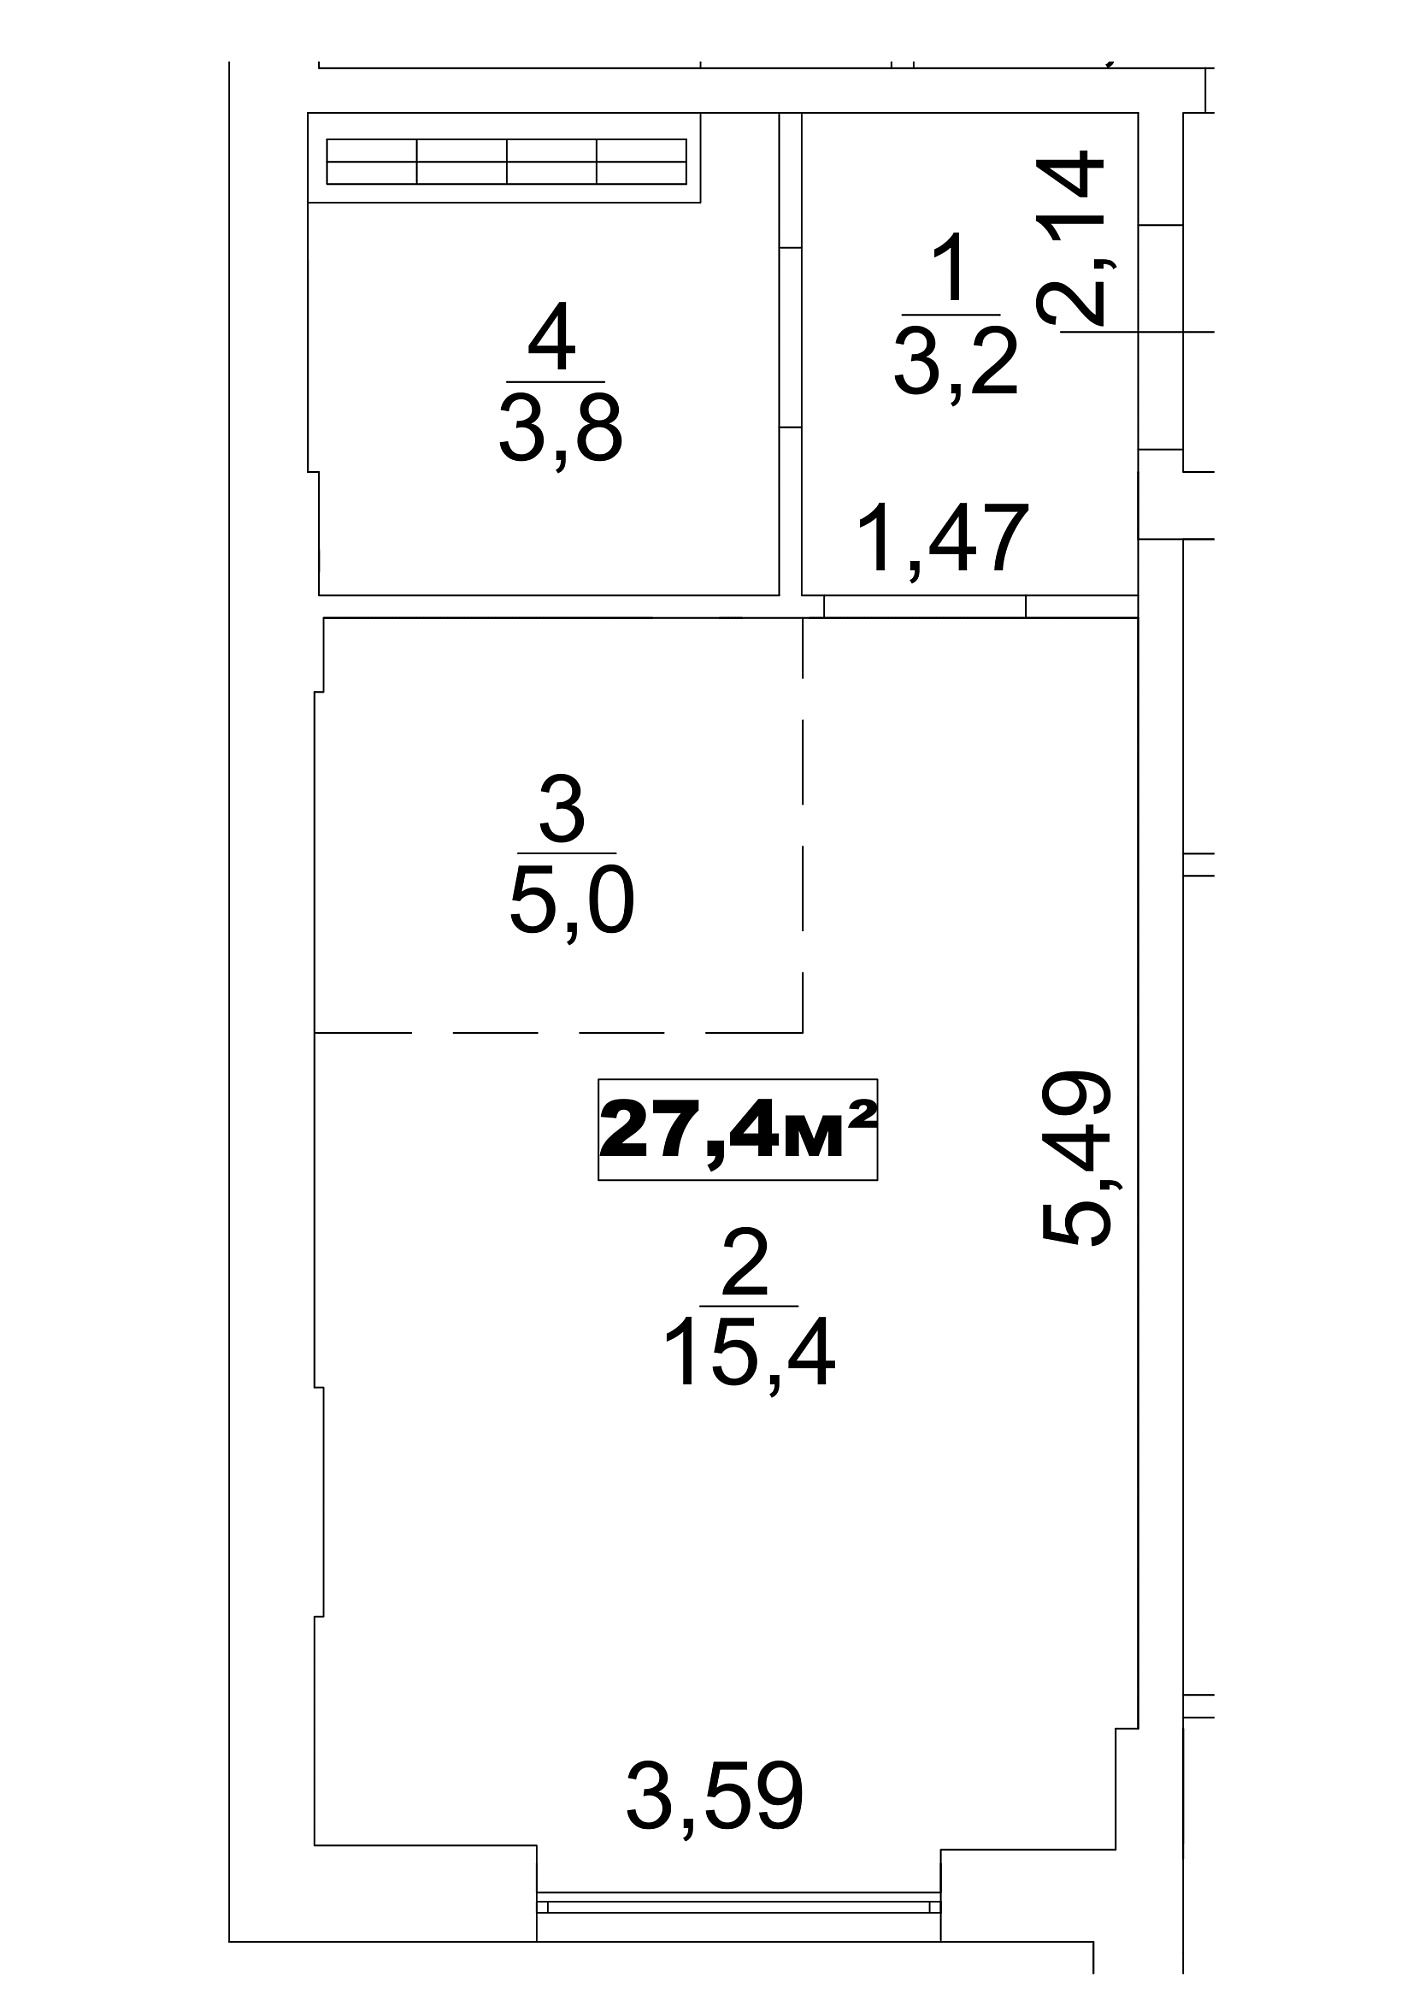 Planning Smart flats area 27.4m2, AB-13-02/0009а.